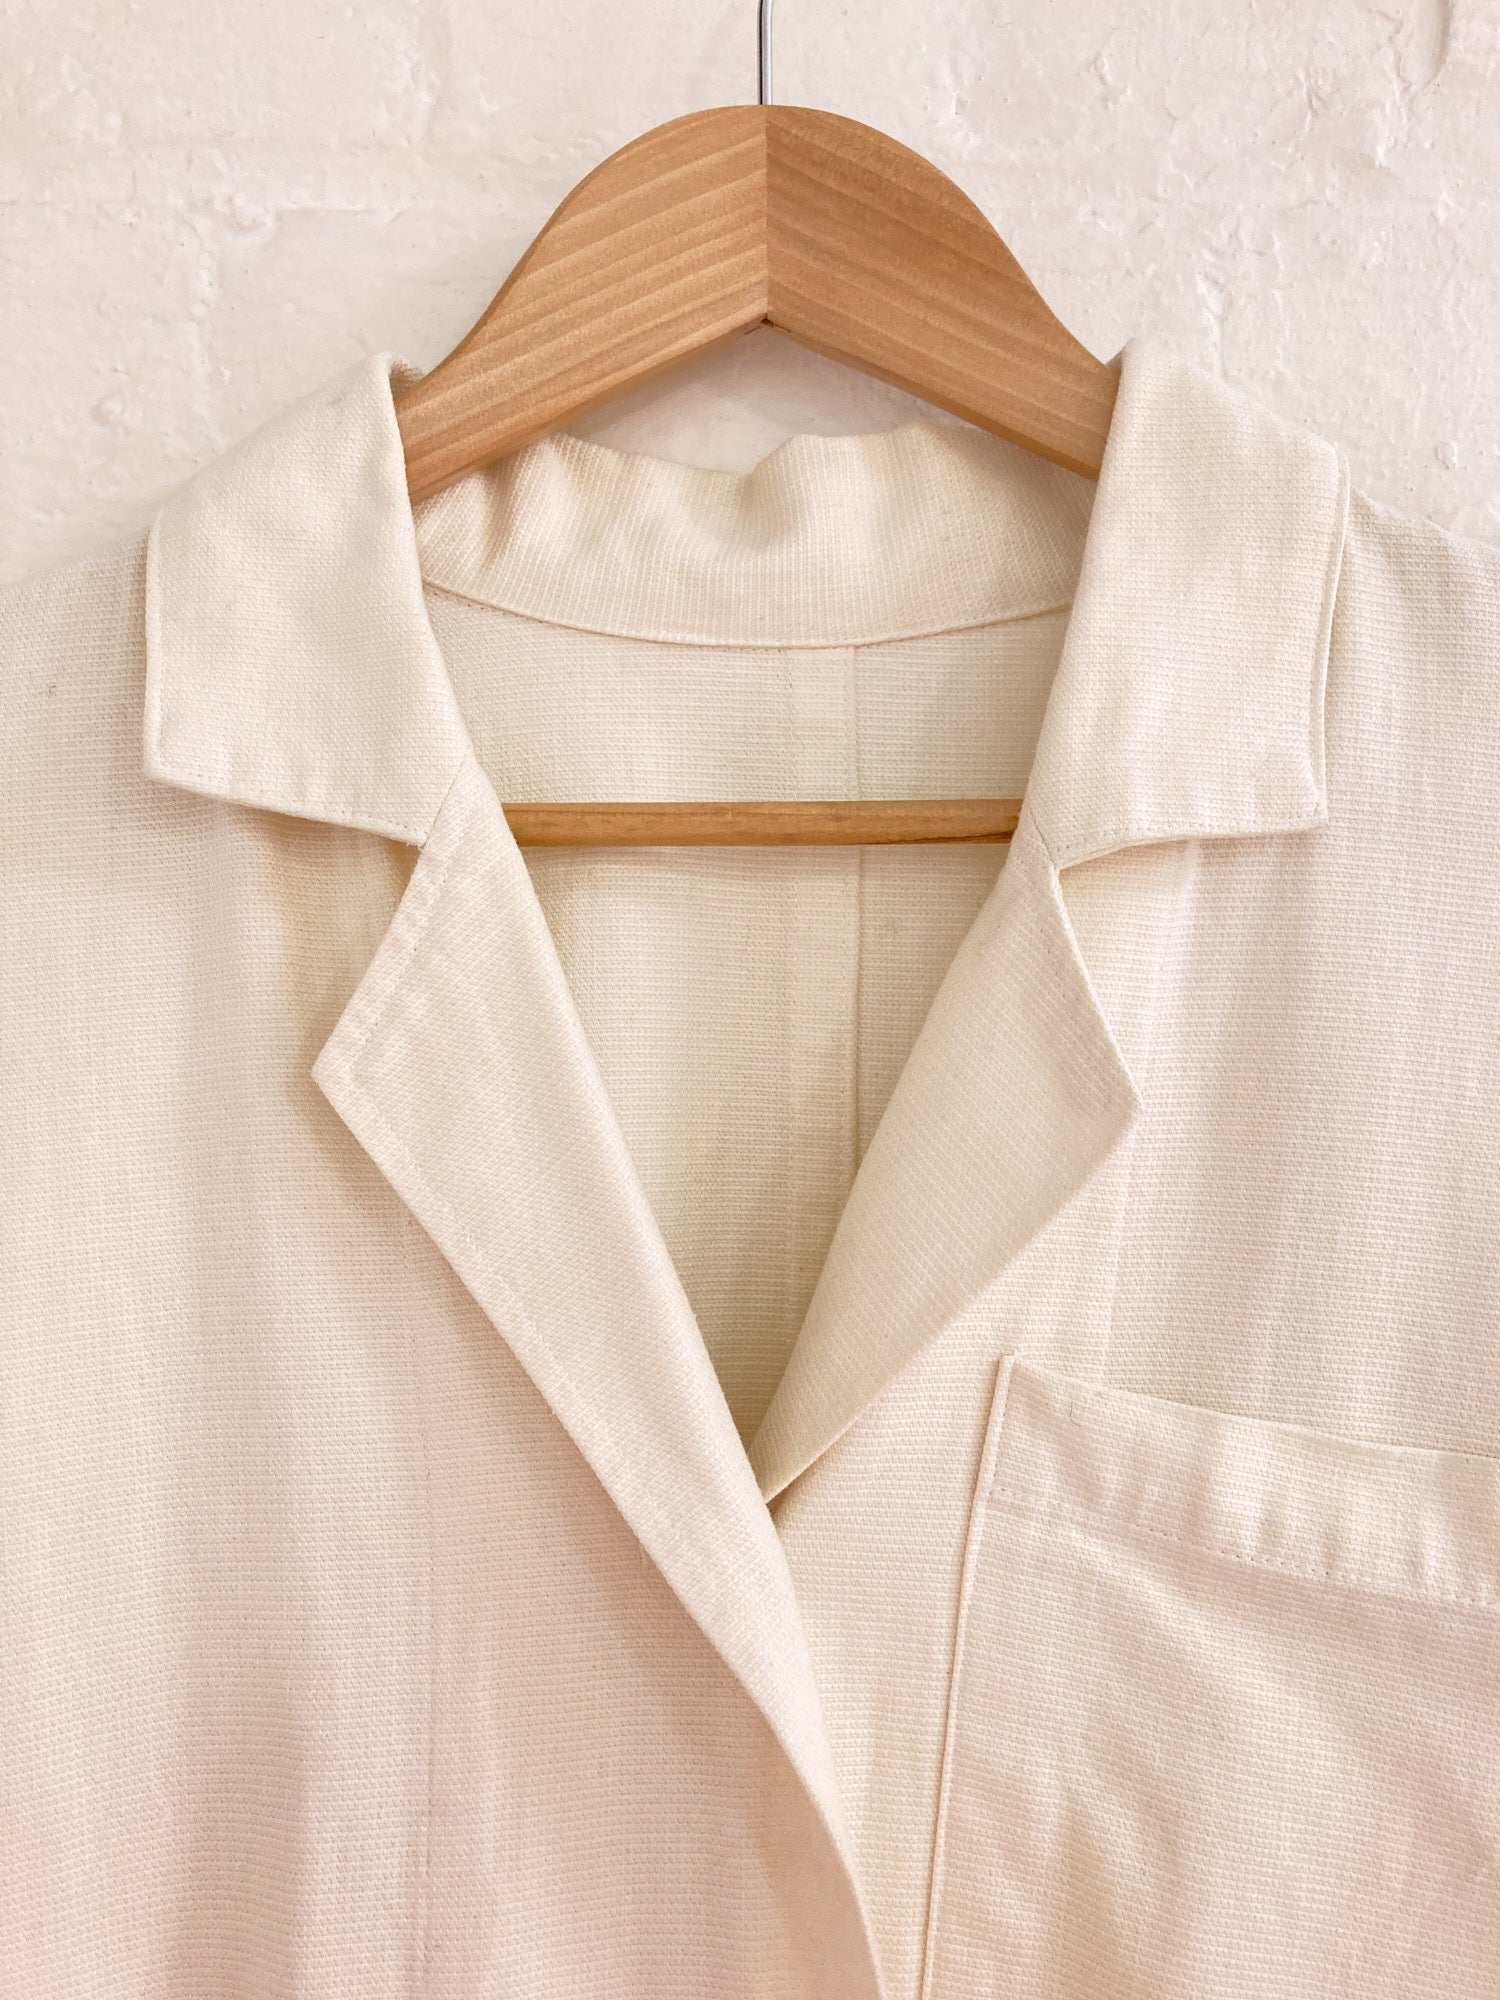 Y’s Yohji Yamamoto Workshop Cottoning 1980s unbleached cotton chore coat